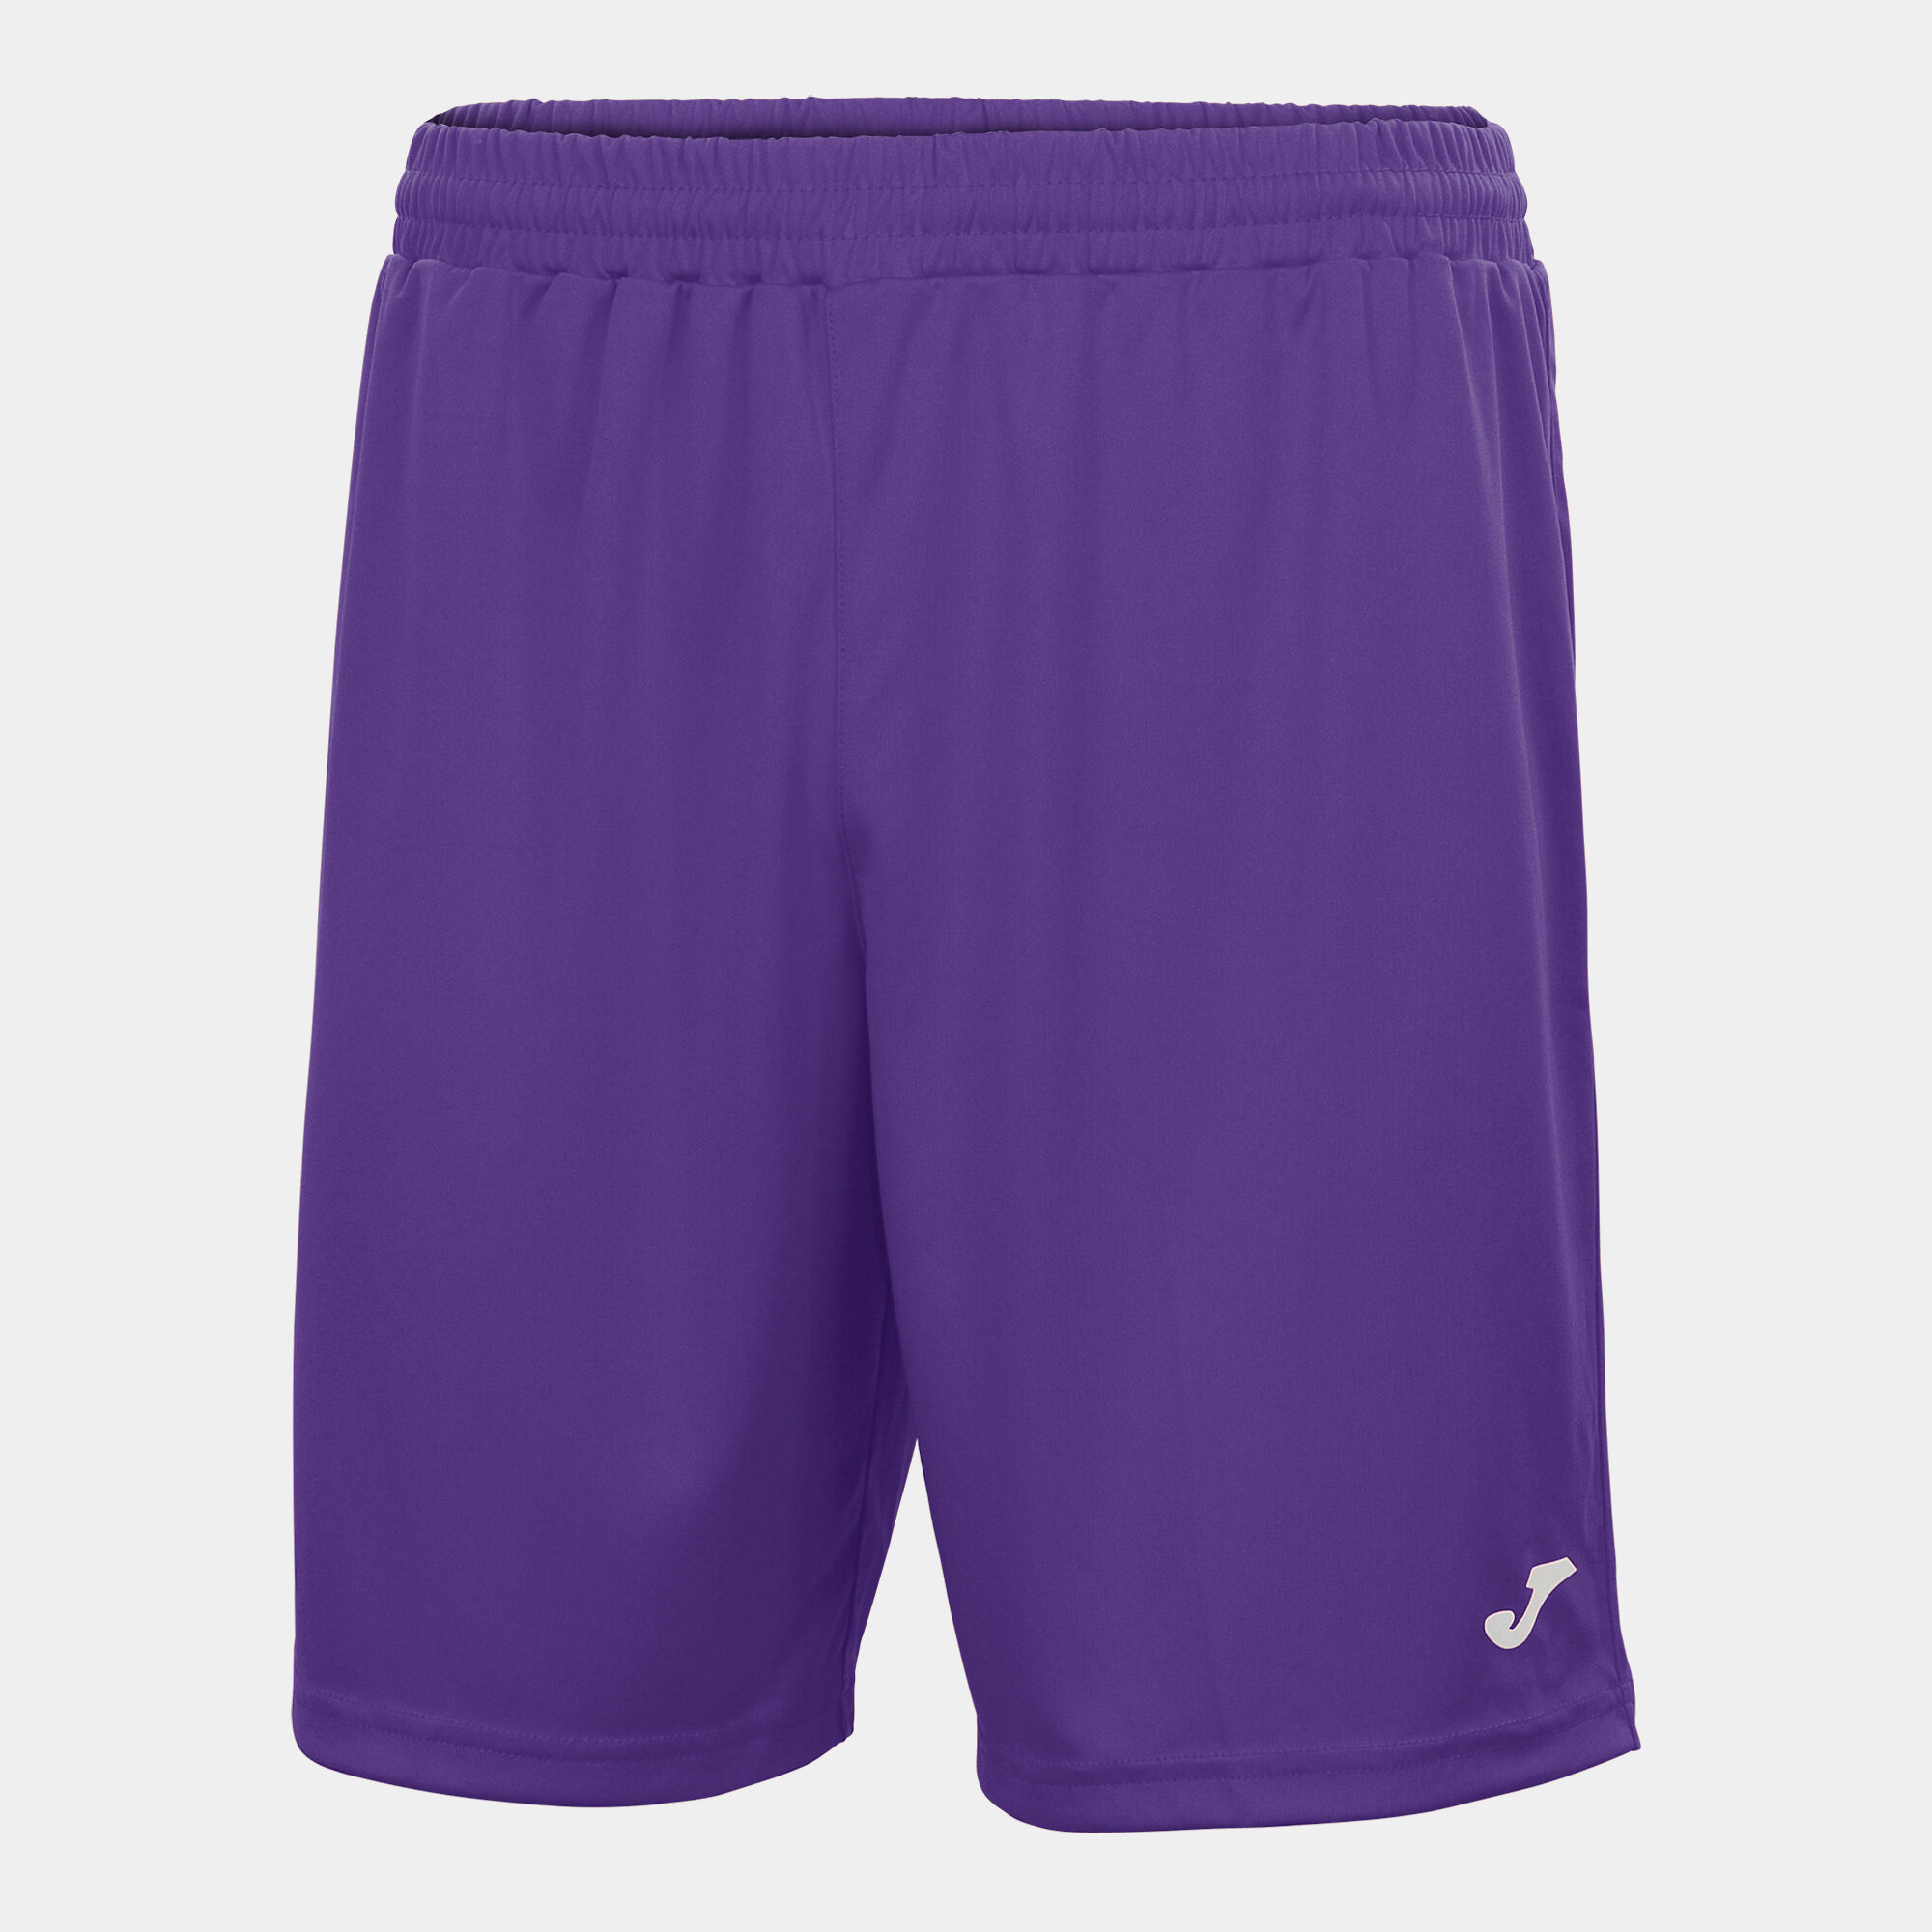 Shorts man Nobel purple